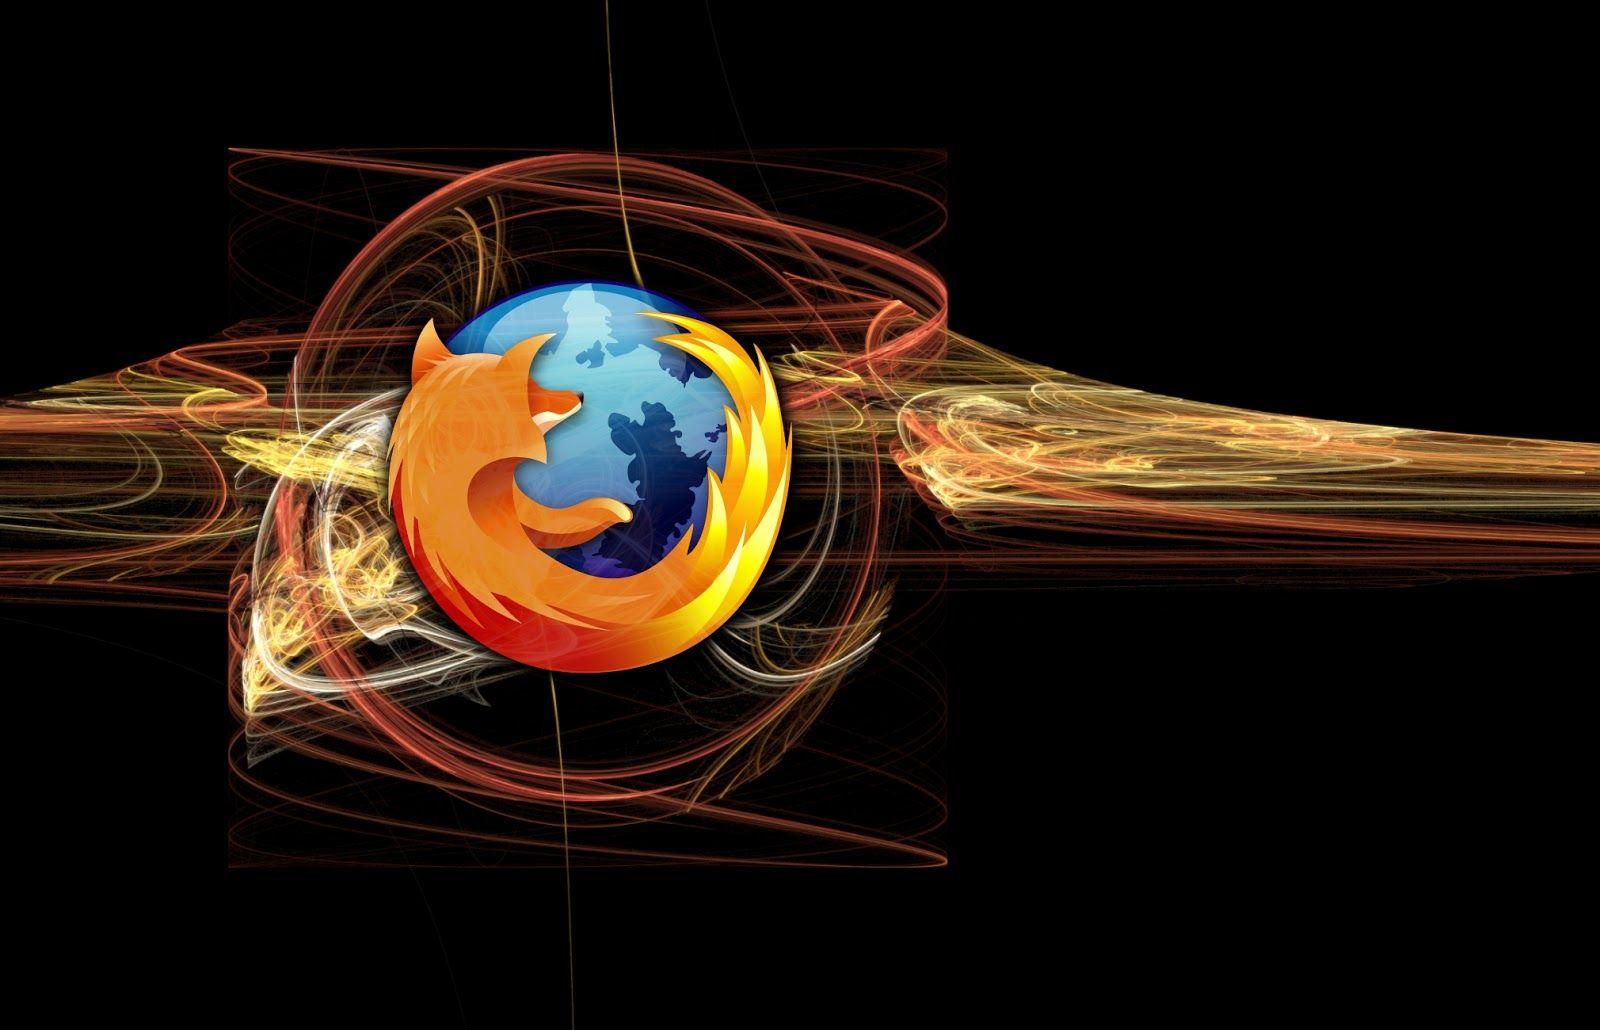 Mozilla Firefox Wallpaper Background. Best image Background